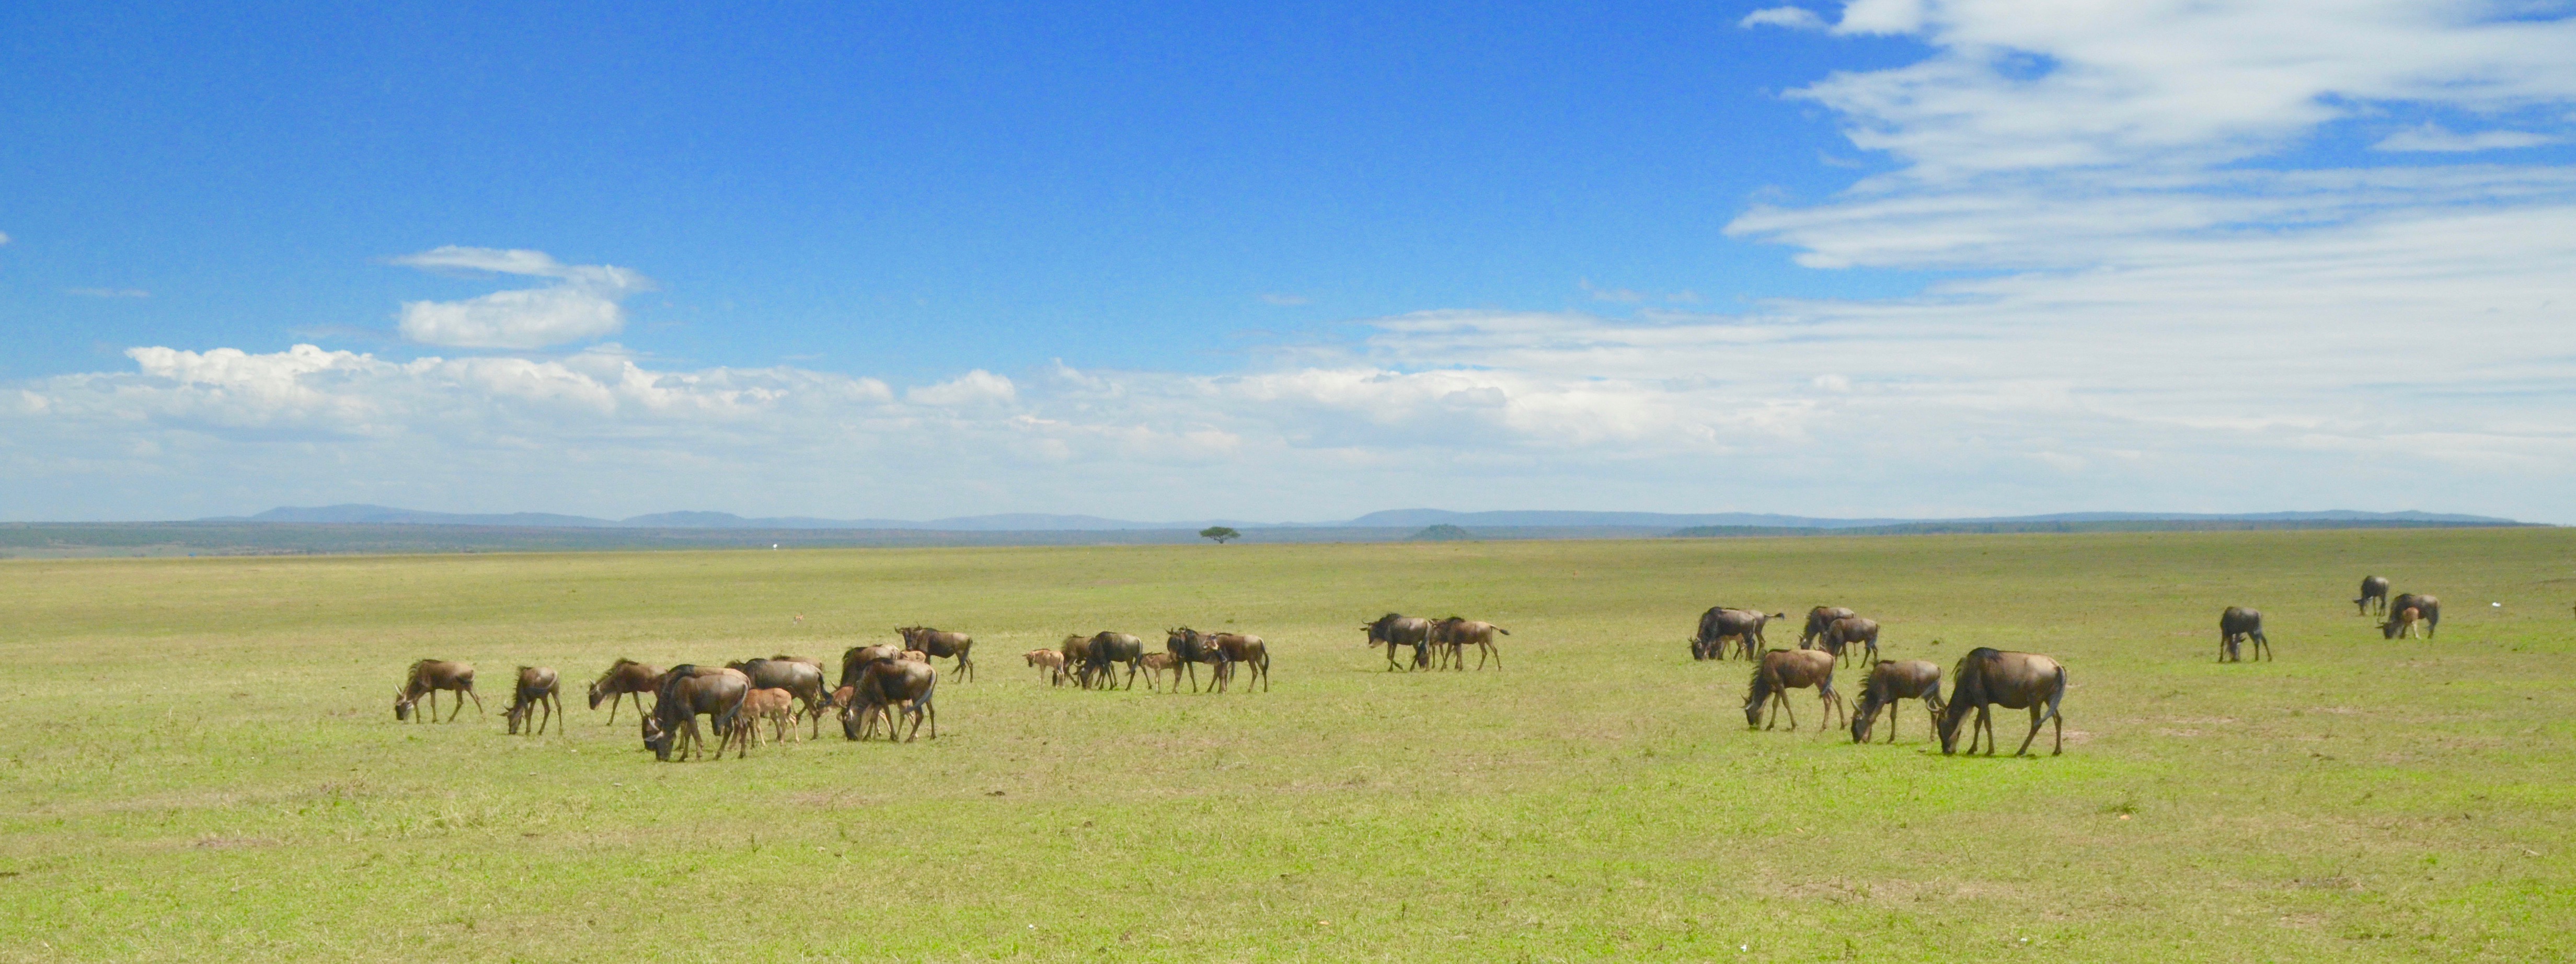 Wildebeest Herd, Masai Mara